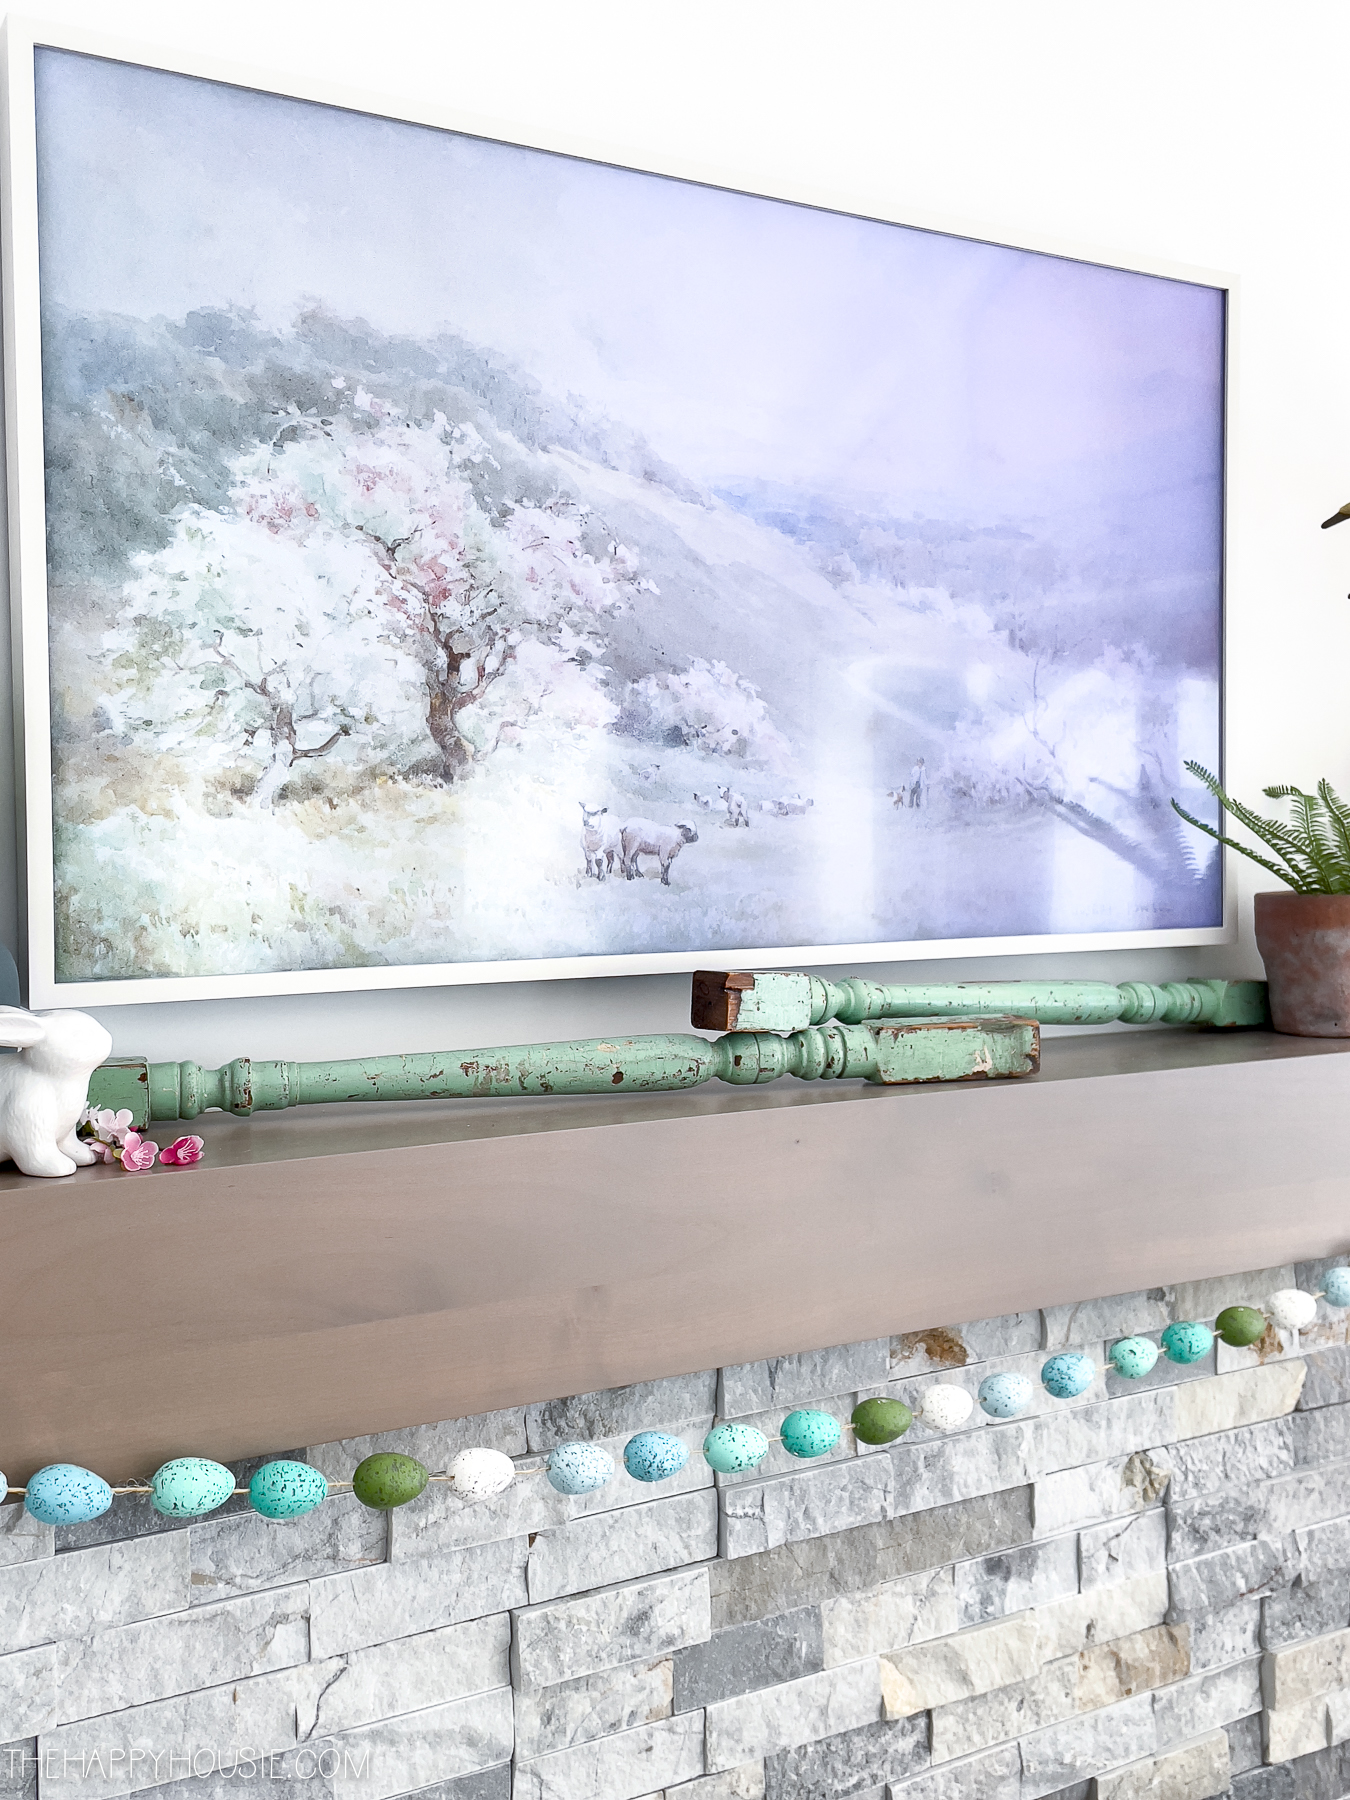 Samsung Frame TV with Easter art